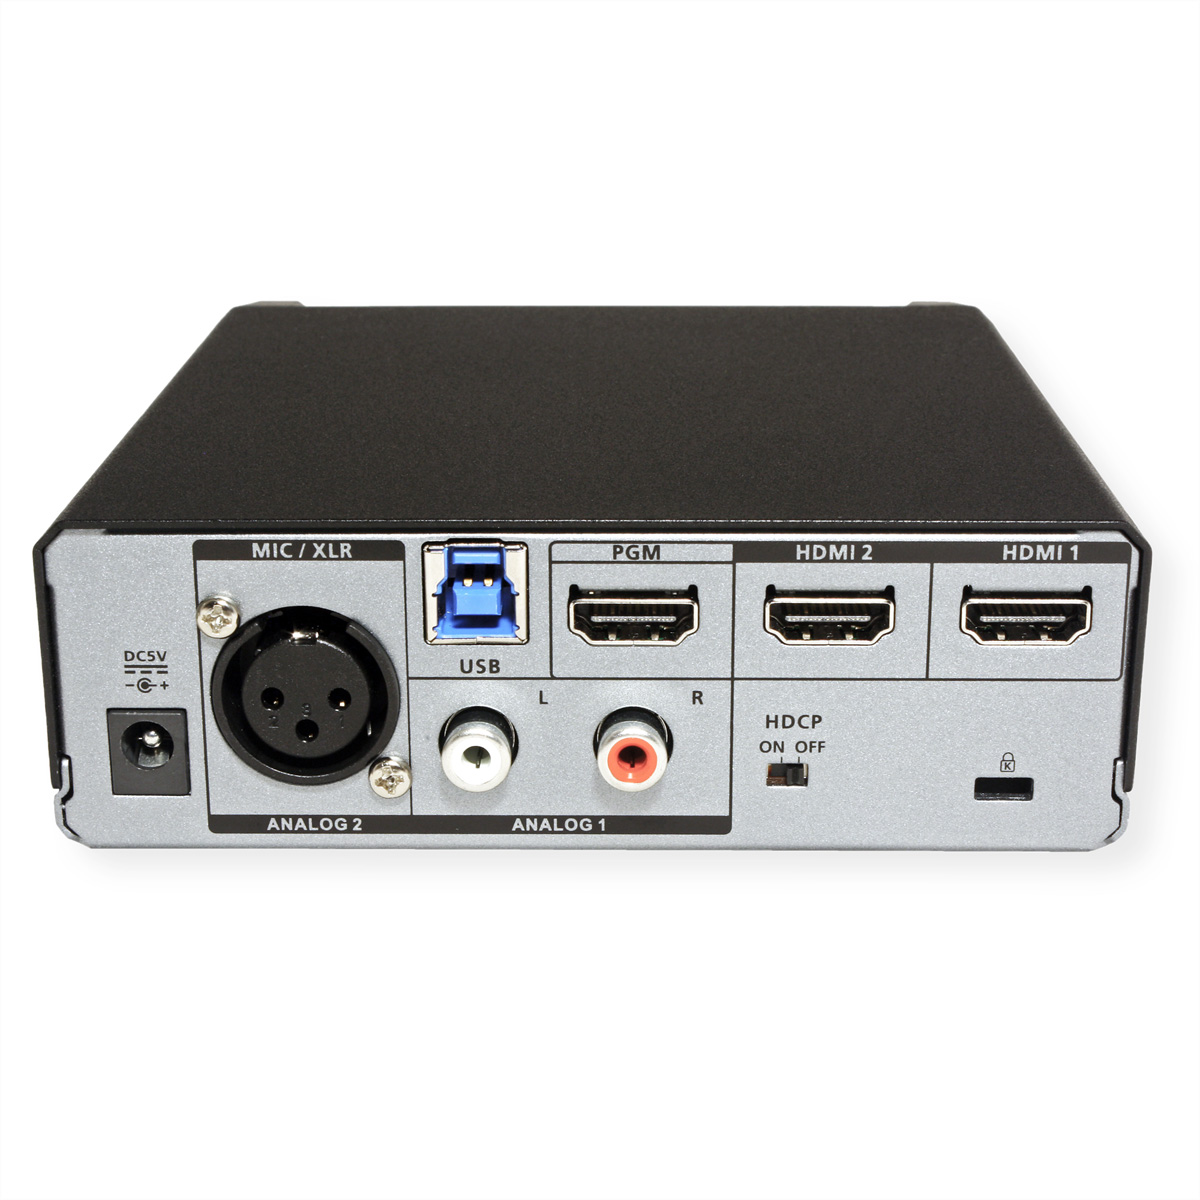 to PRO CAMLIVE HDMI UC3022 USB-C Adapter Video USB-HDMI ATEN Capture